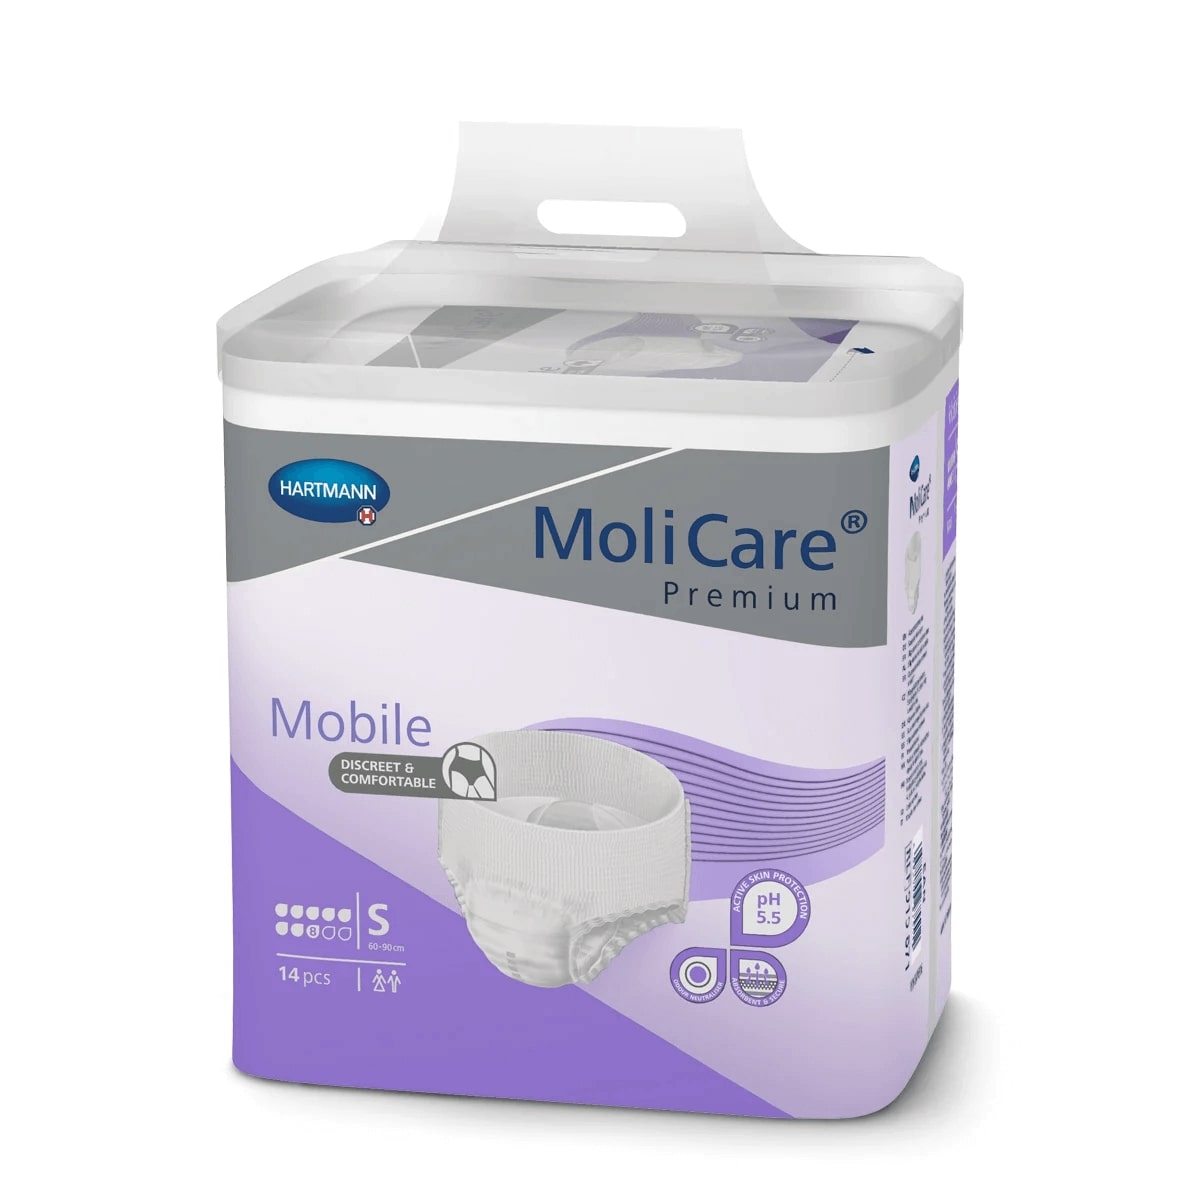 MoliCare Premium Mobile 8 Tropfen, Einweghosen